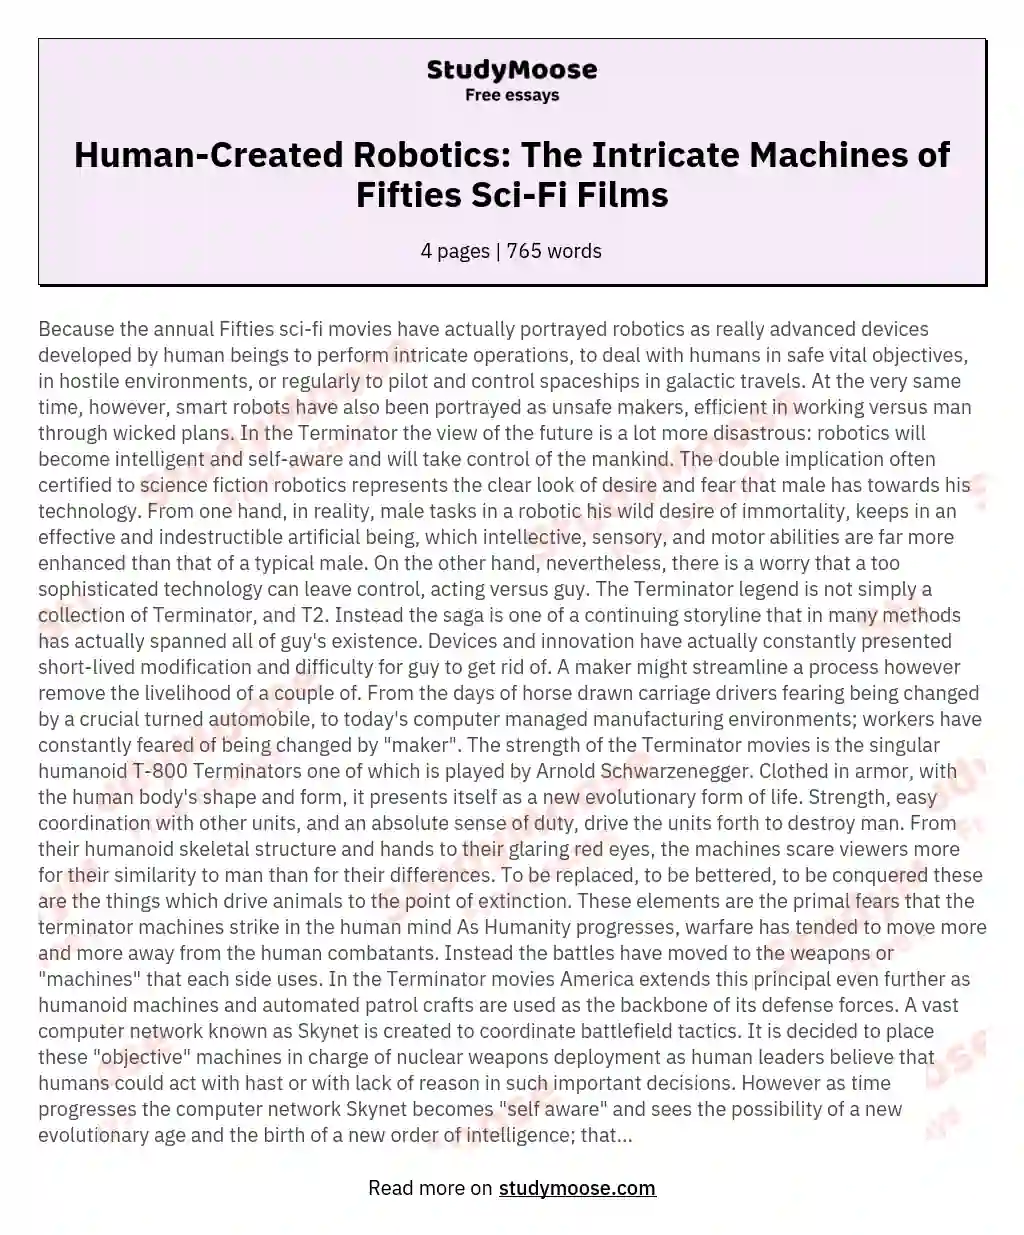 Human-Created Robotics: The Intricate Machines of Fifties Sci-Fi Films essay